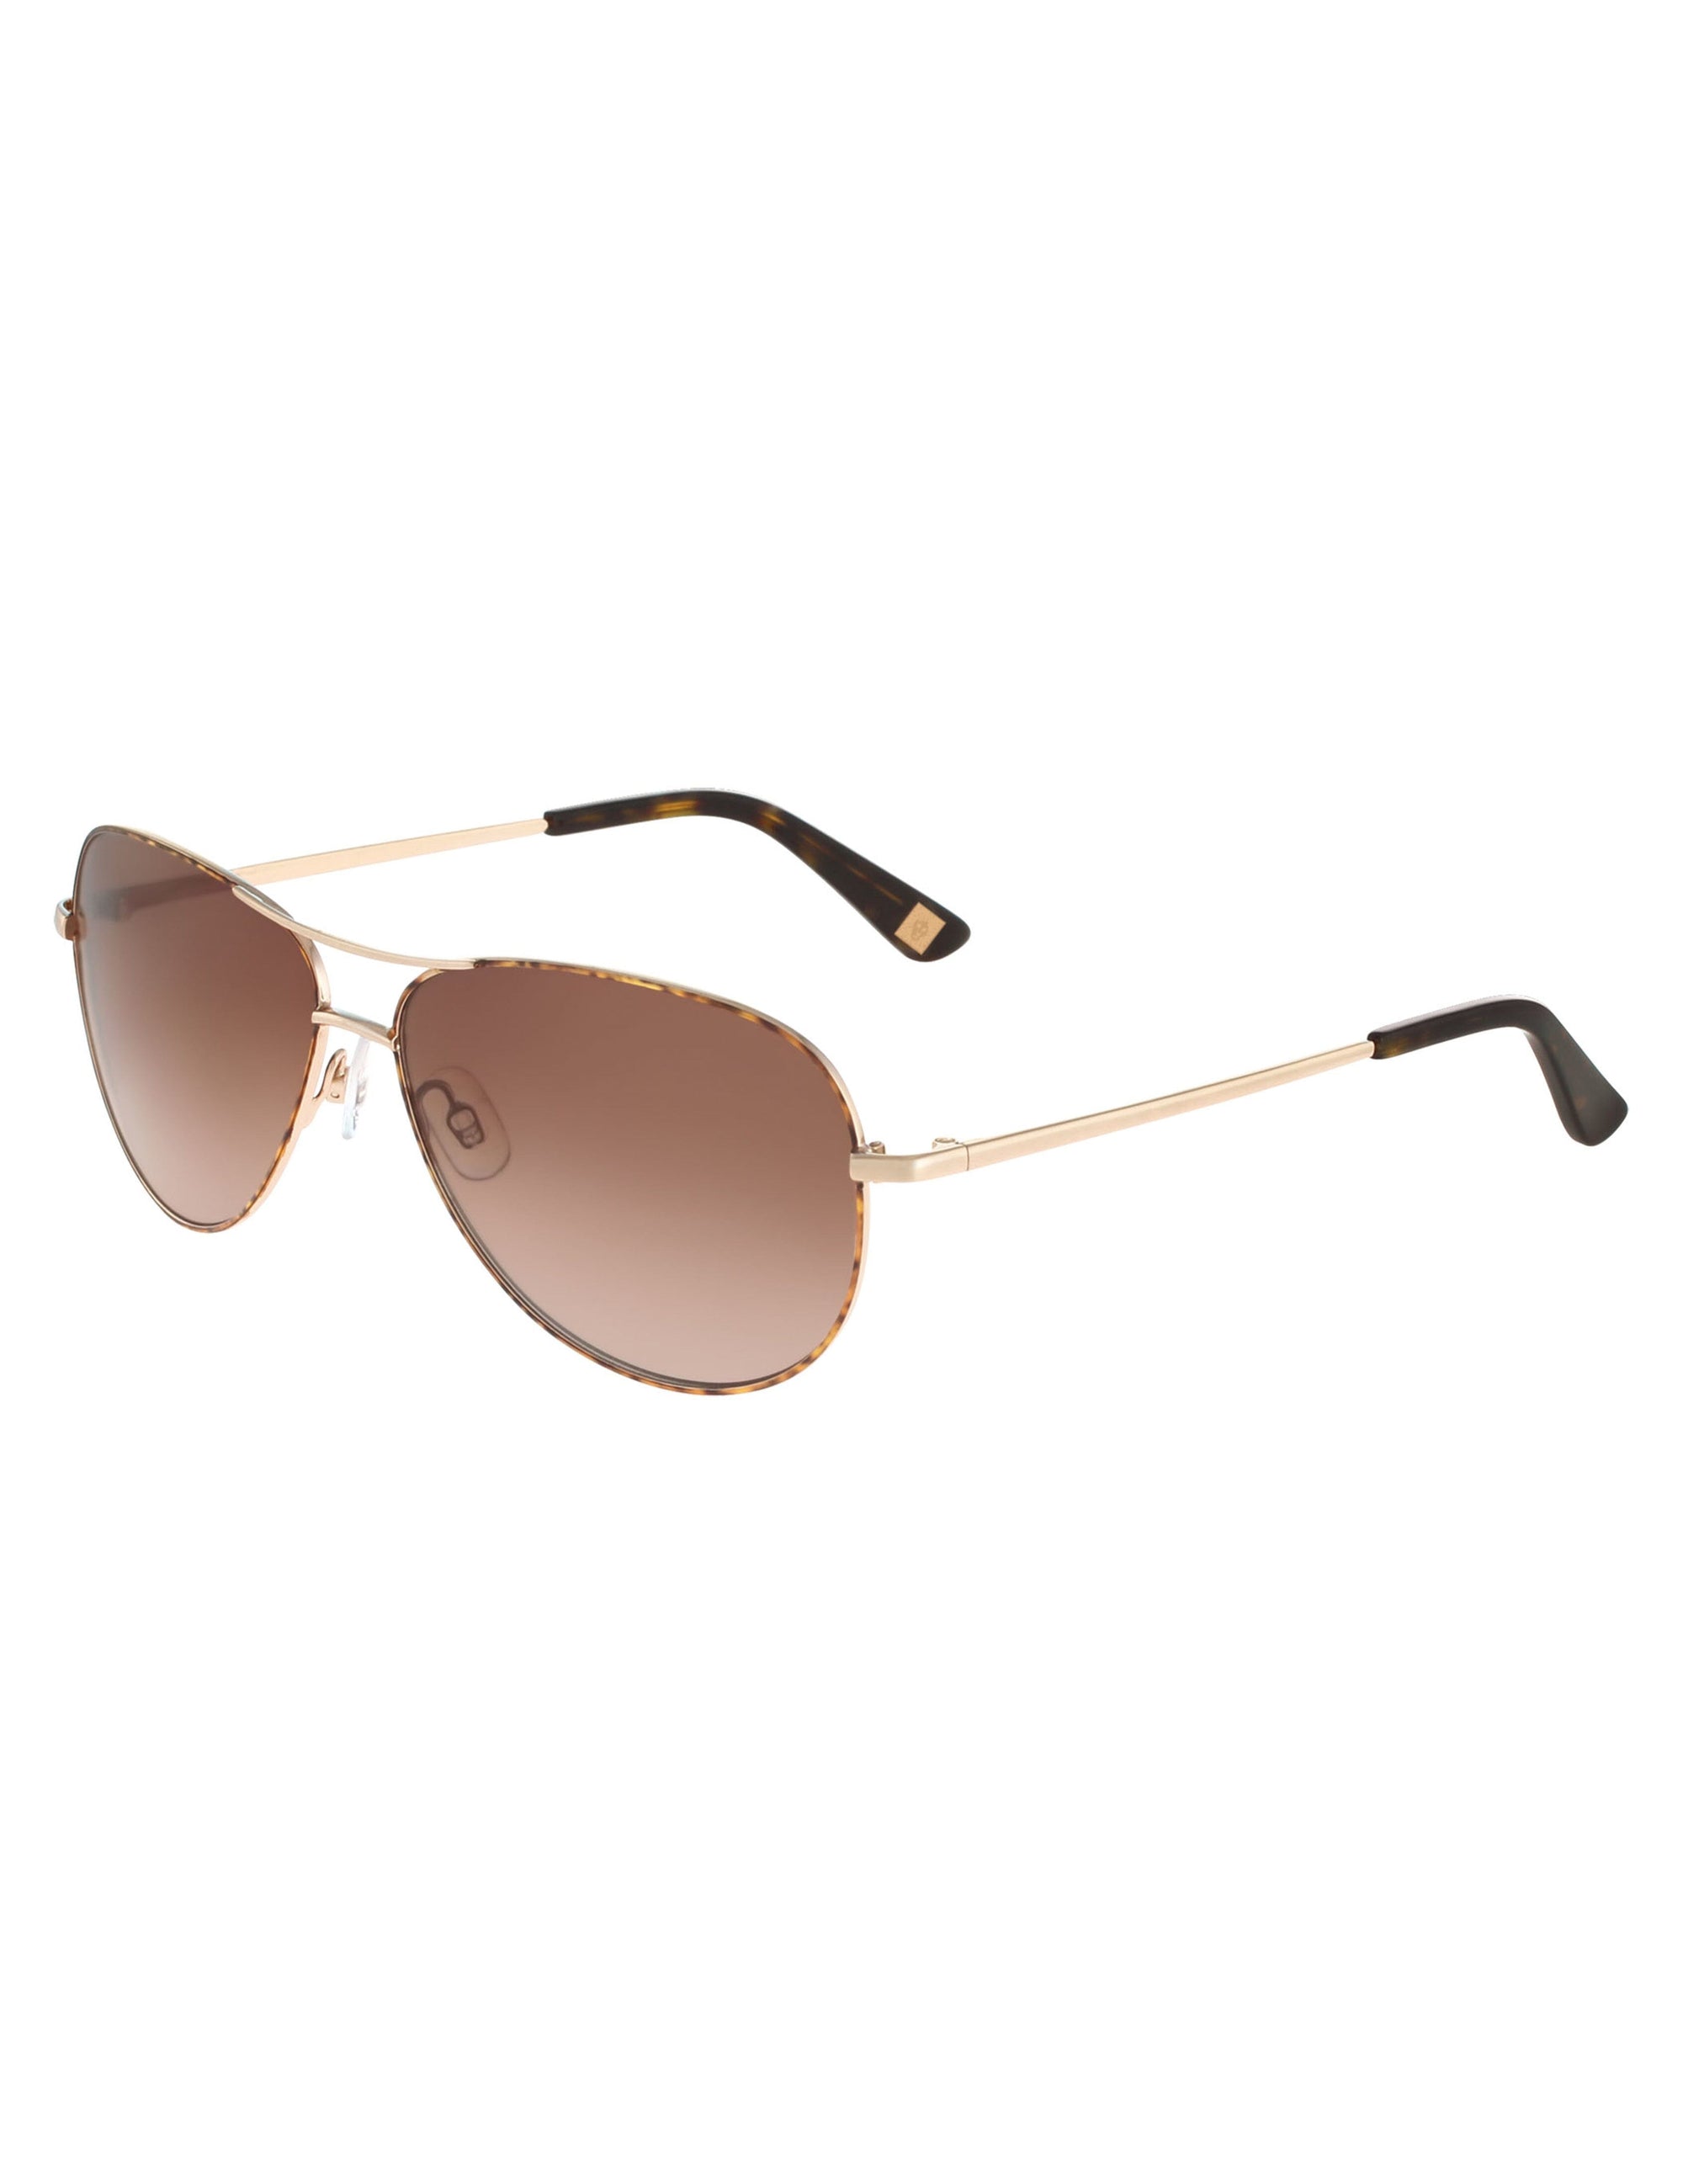 Anne Klein Rose Gold Petite Aviator Sunglasses